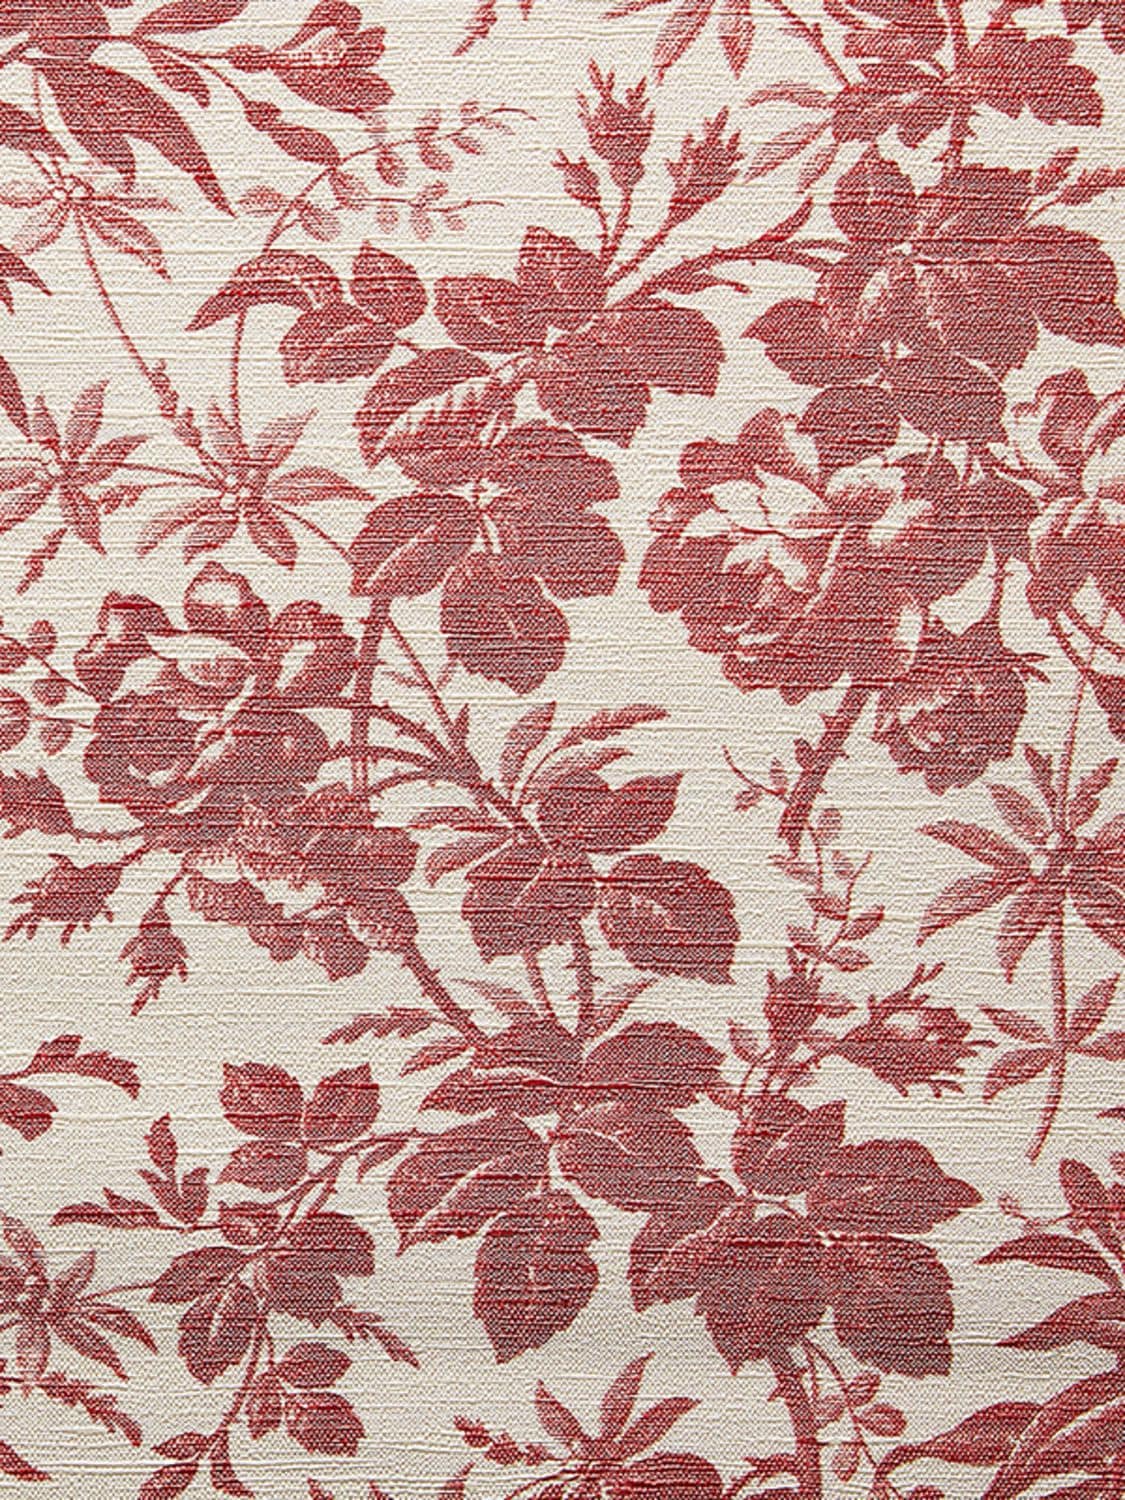 Gucci Herbarium Print Wallpaper 100cmx7mt - White